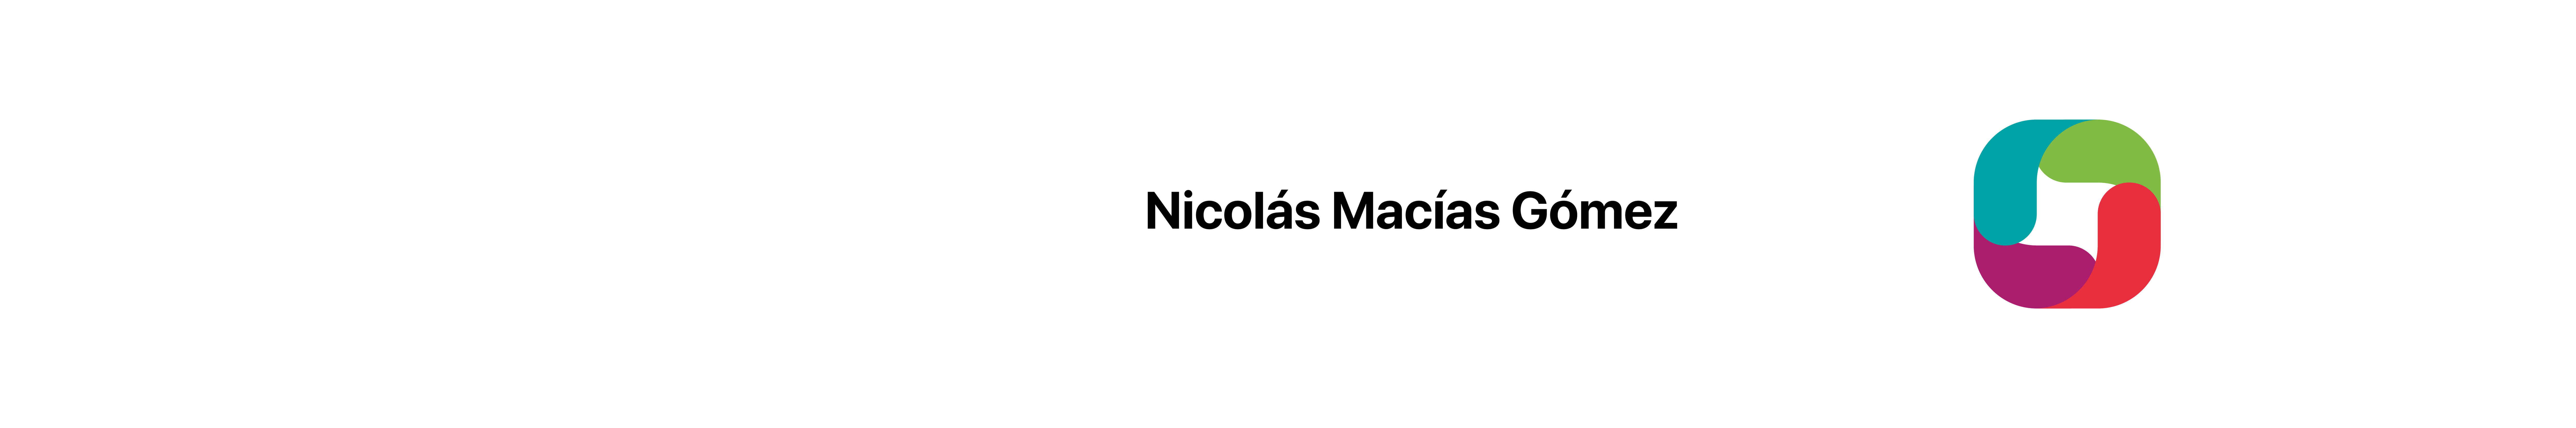 Nicolás Macías Gómez's profile banner